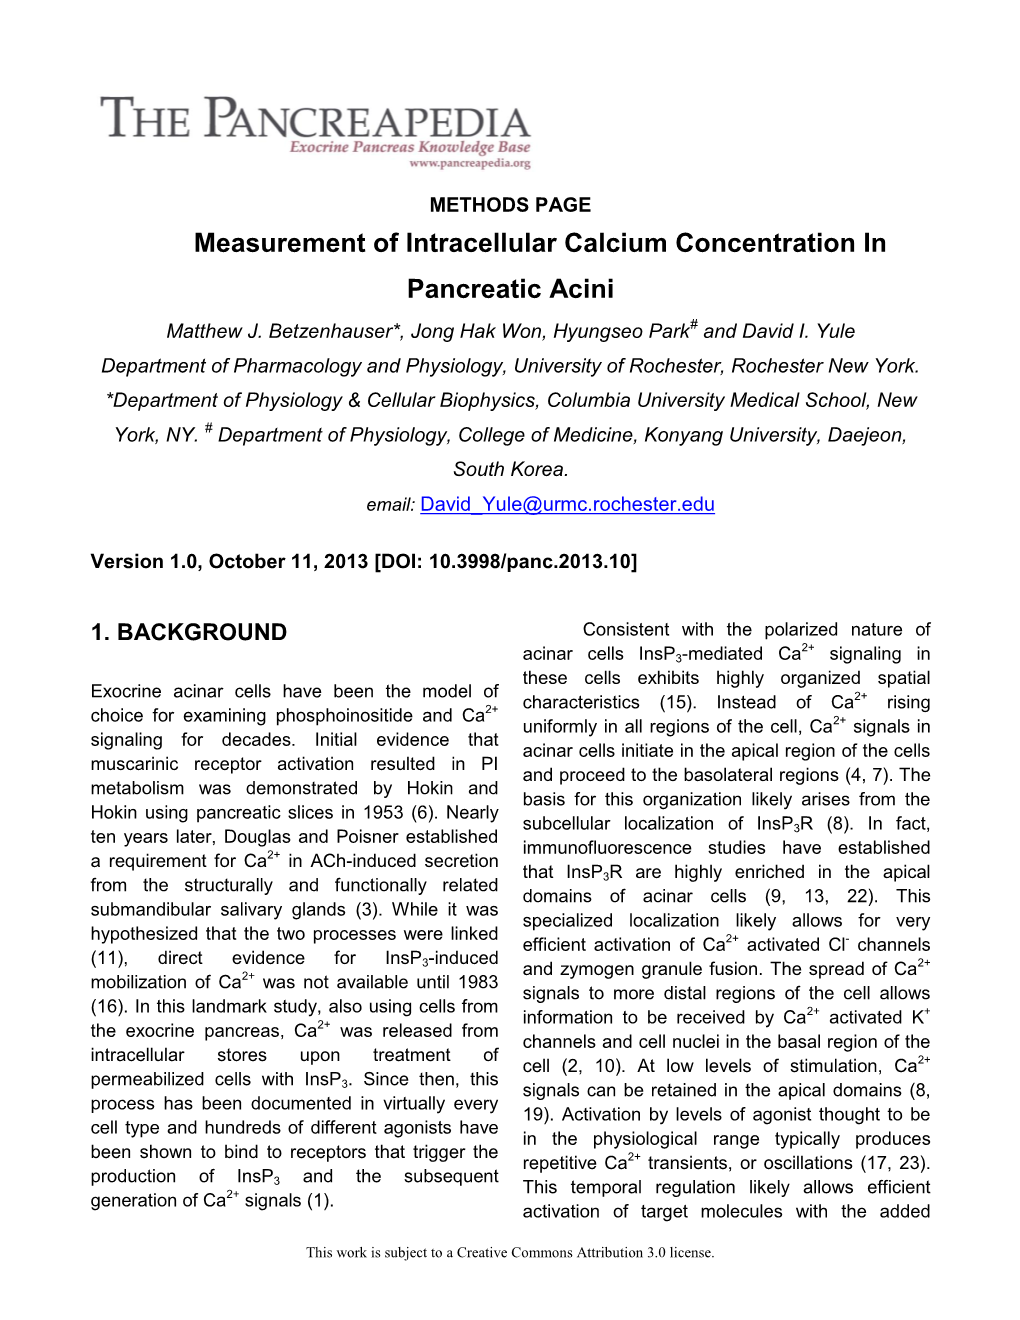 Measurement Intracellular Calcium Concentration